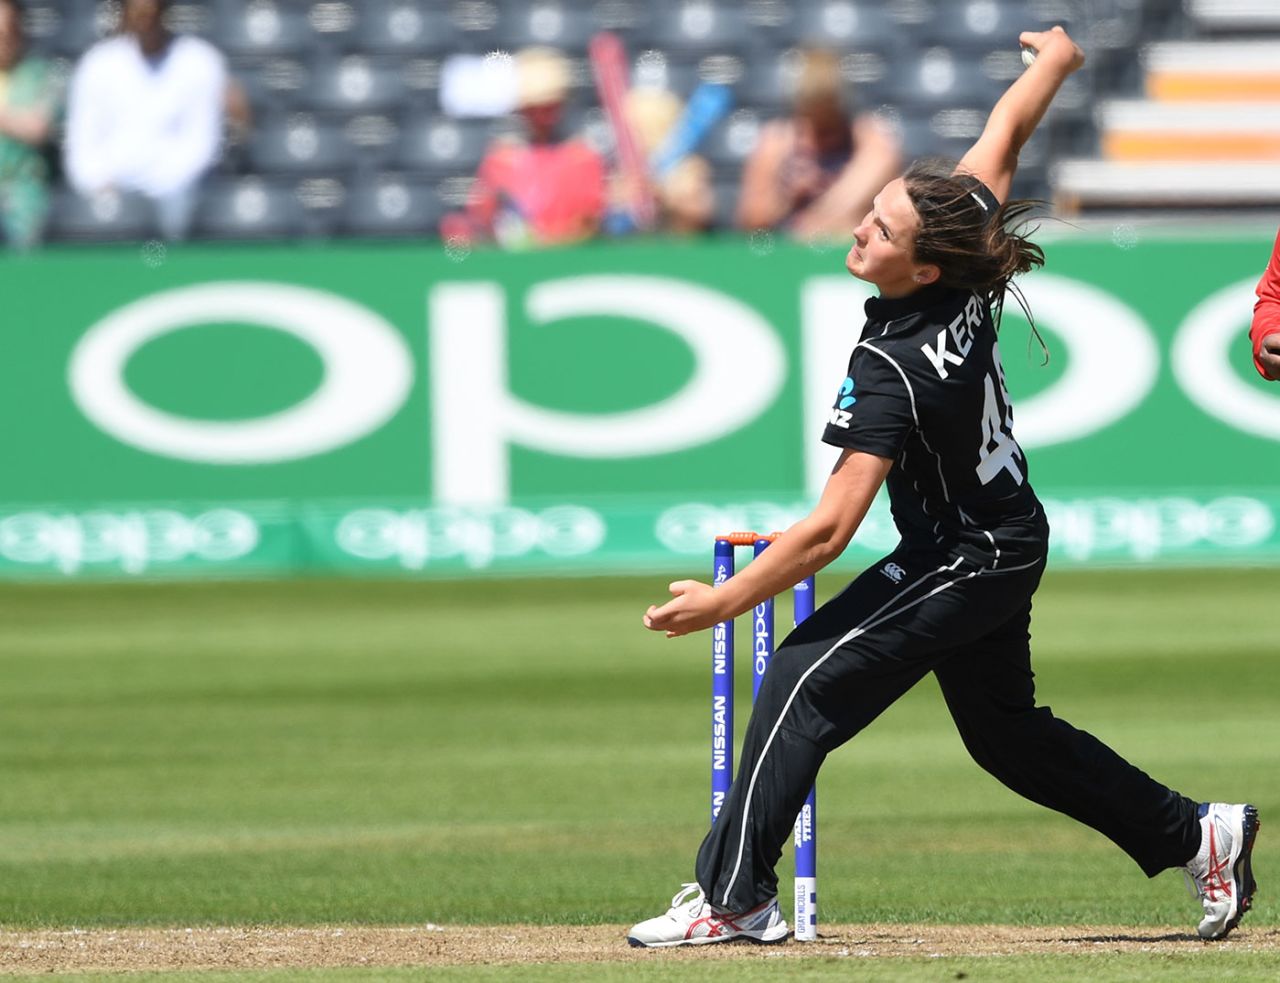 Amelia Kerr bowls, Australia v New Zealand, Women's World Cup 2017, Bristol, July 2, 2017